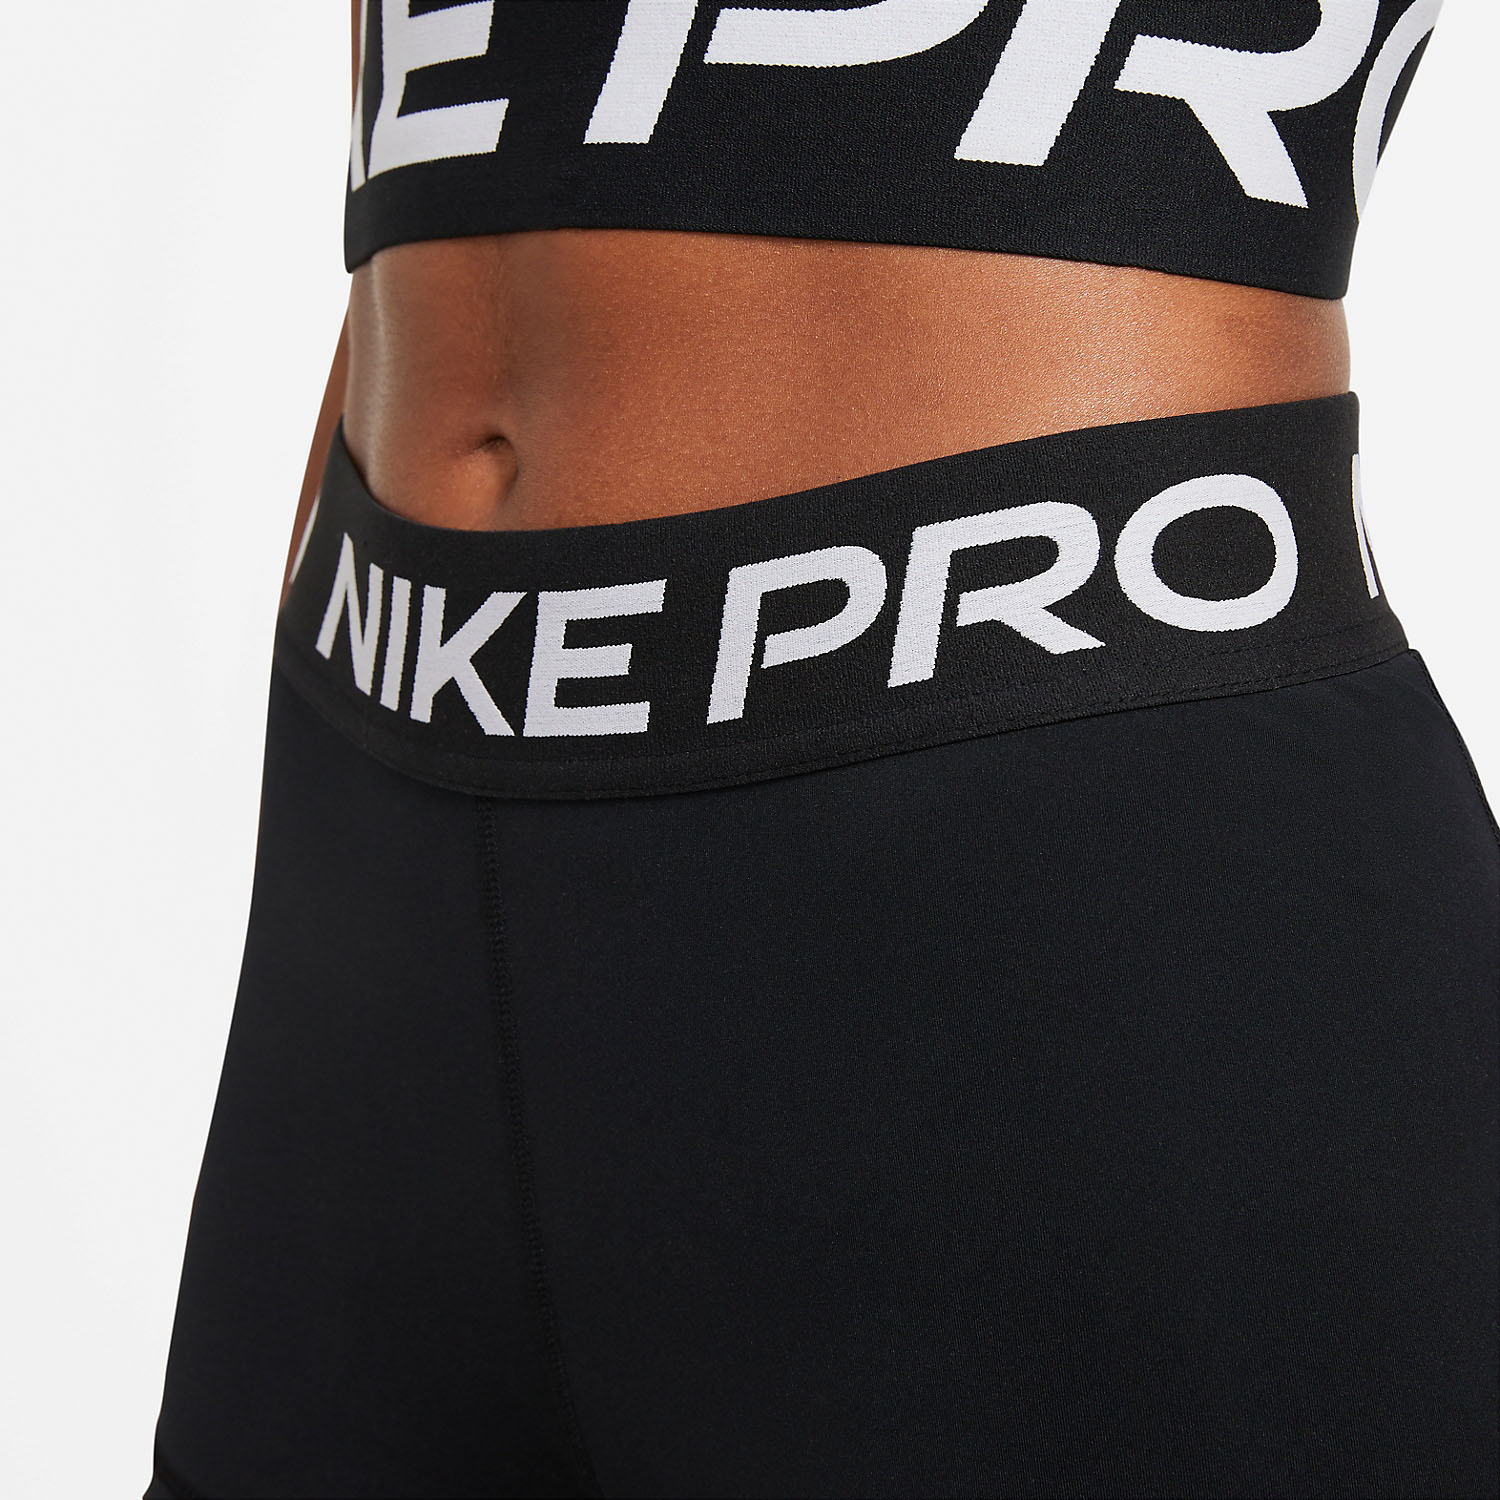 Nike Pro 3in Shorts - Black/White